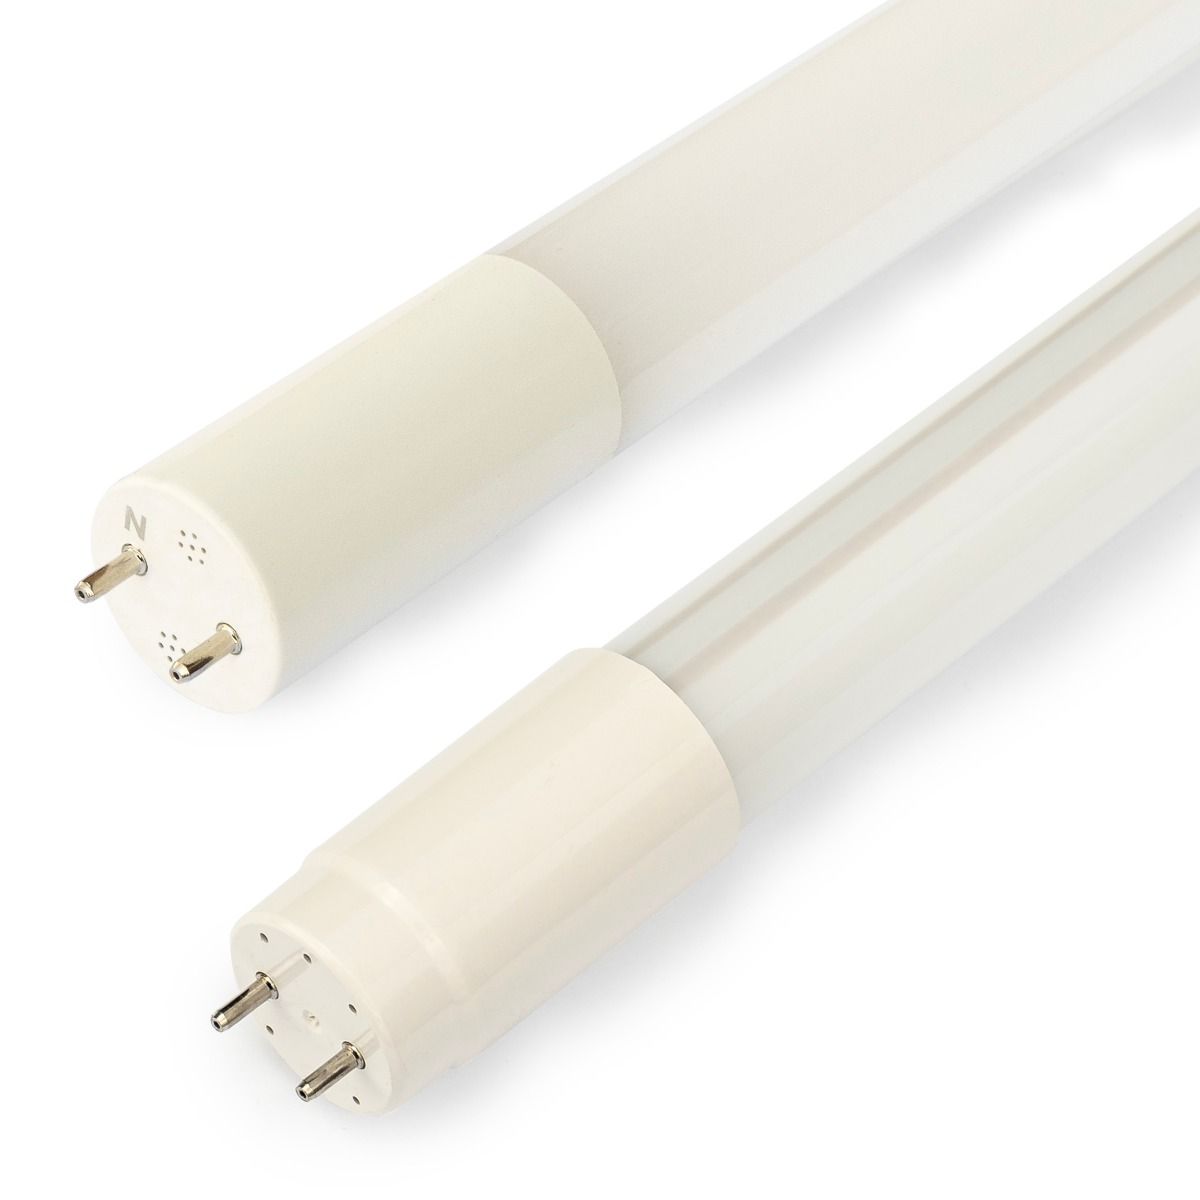 T8 Fluorescent Lamps vs T8 LED Tubes